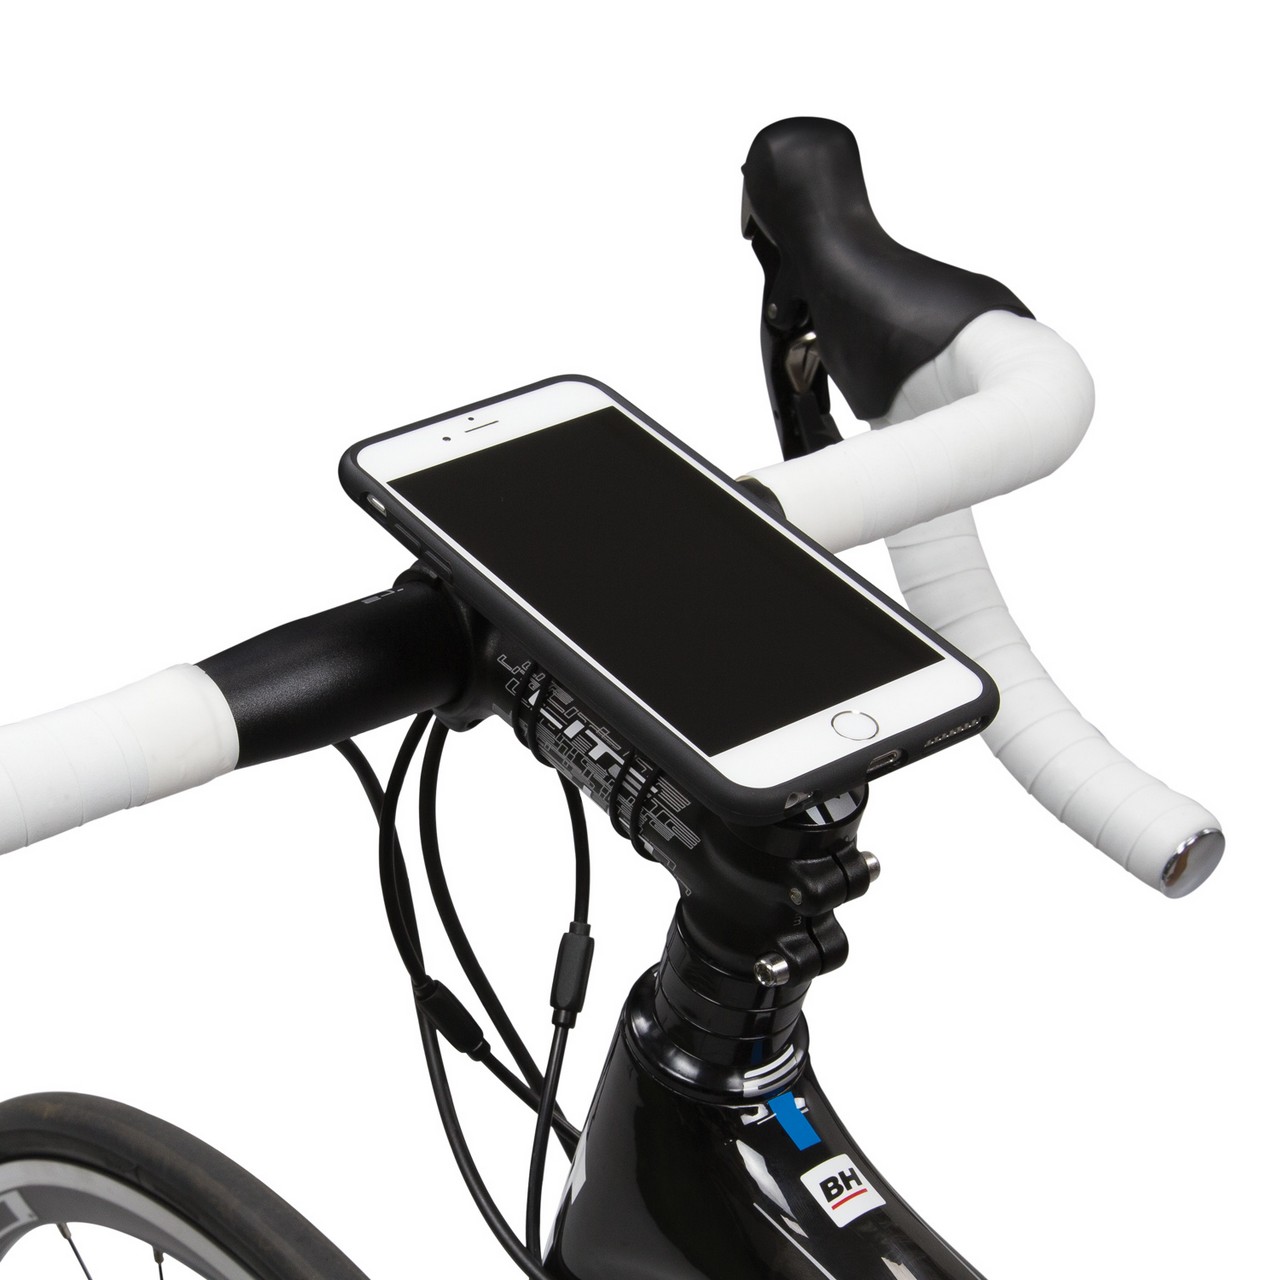 Webike Quad Lock クアッドロック 自転車バイクキット Iphone 6 Plus 6s Plus用 Qlk Bke I6plus その他各種電子機器マウント オプション 補修部品 通販